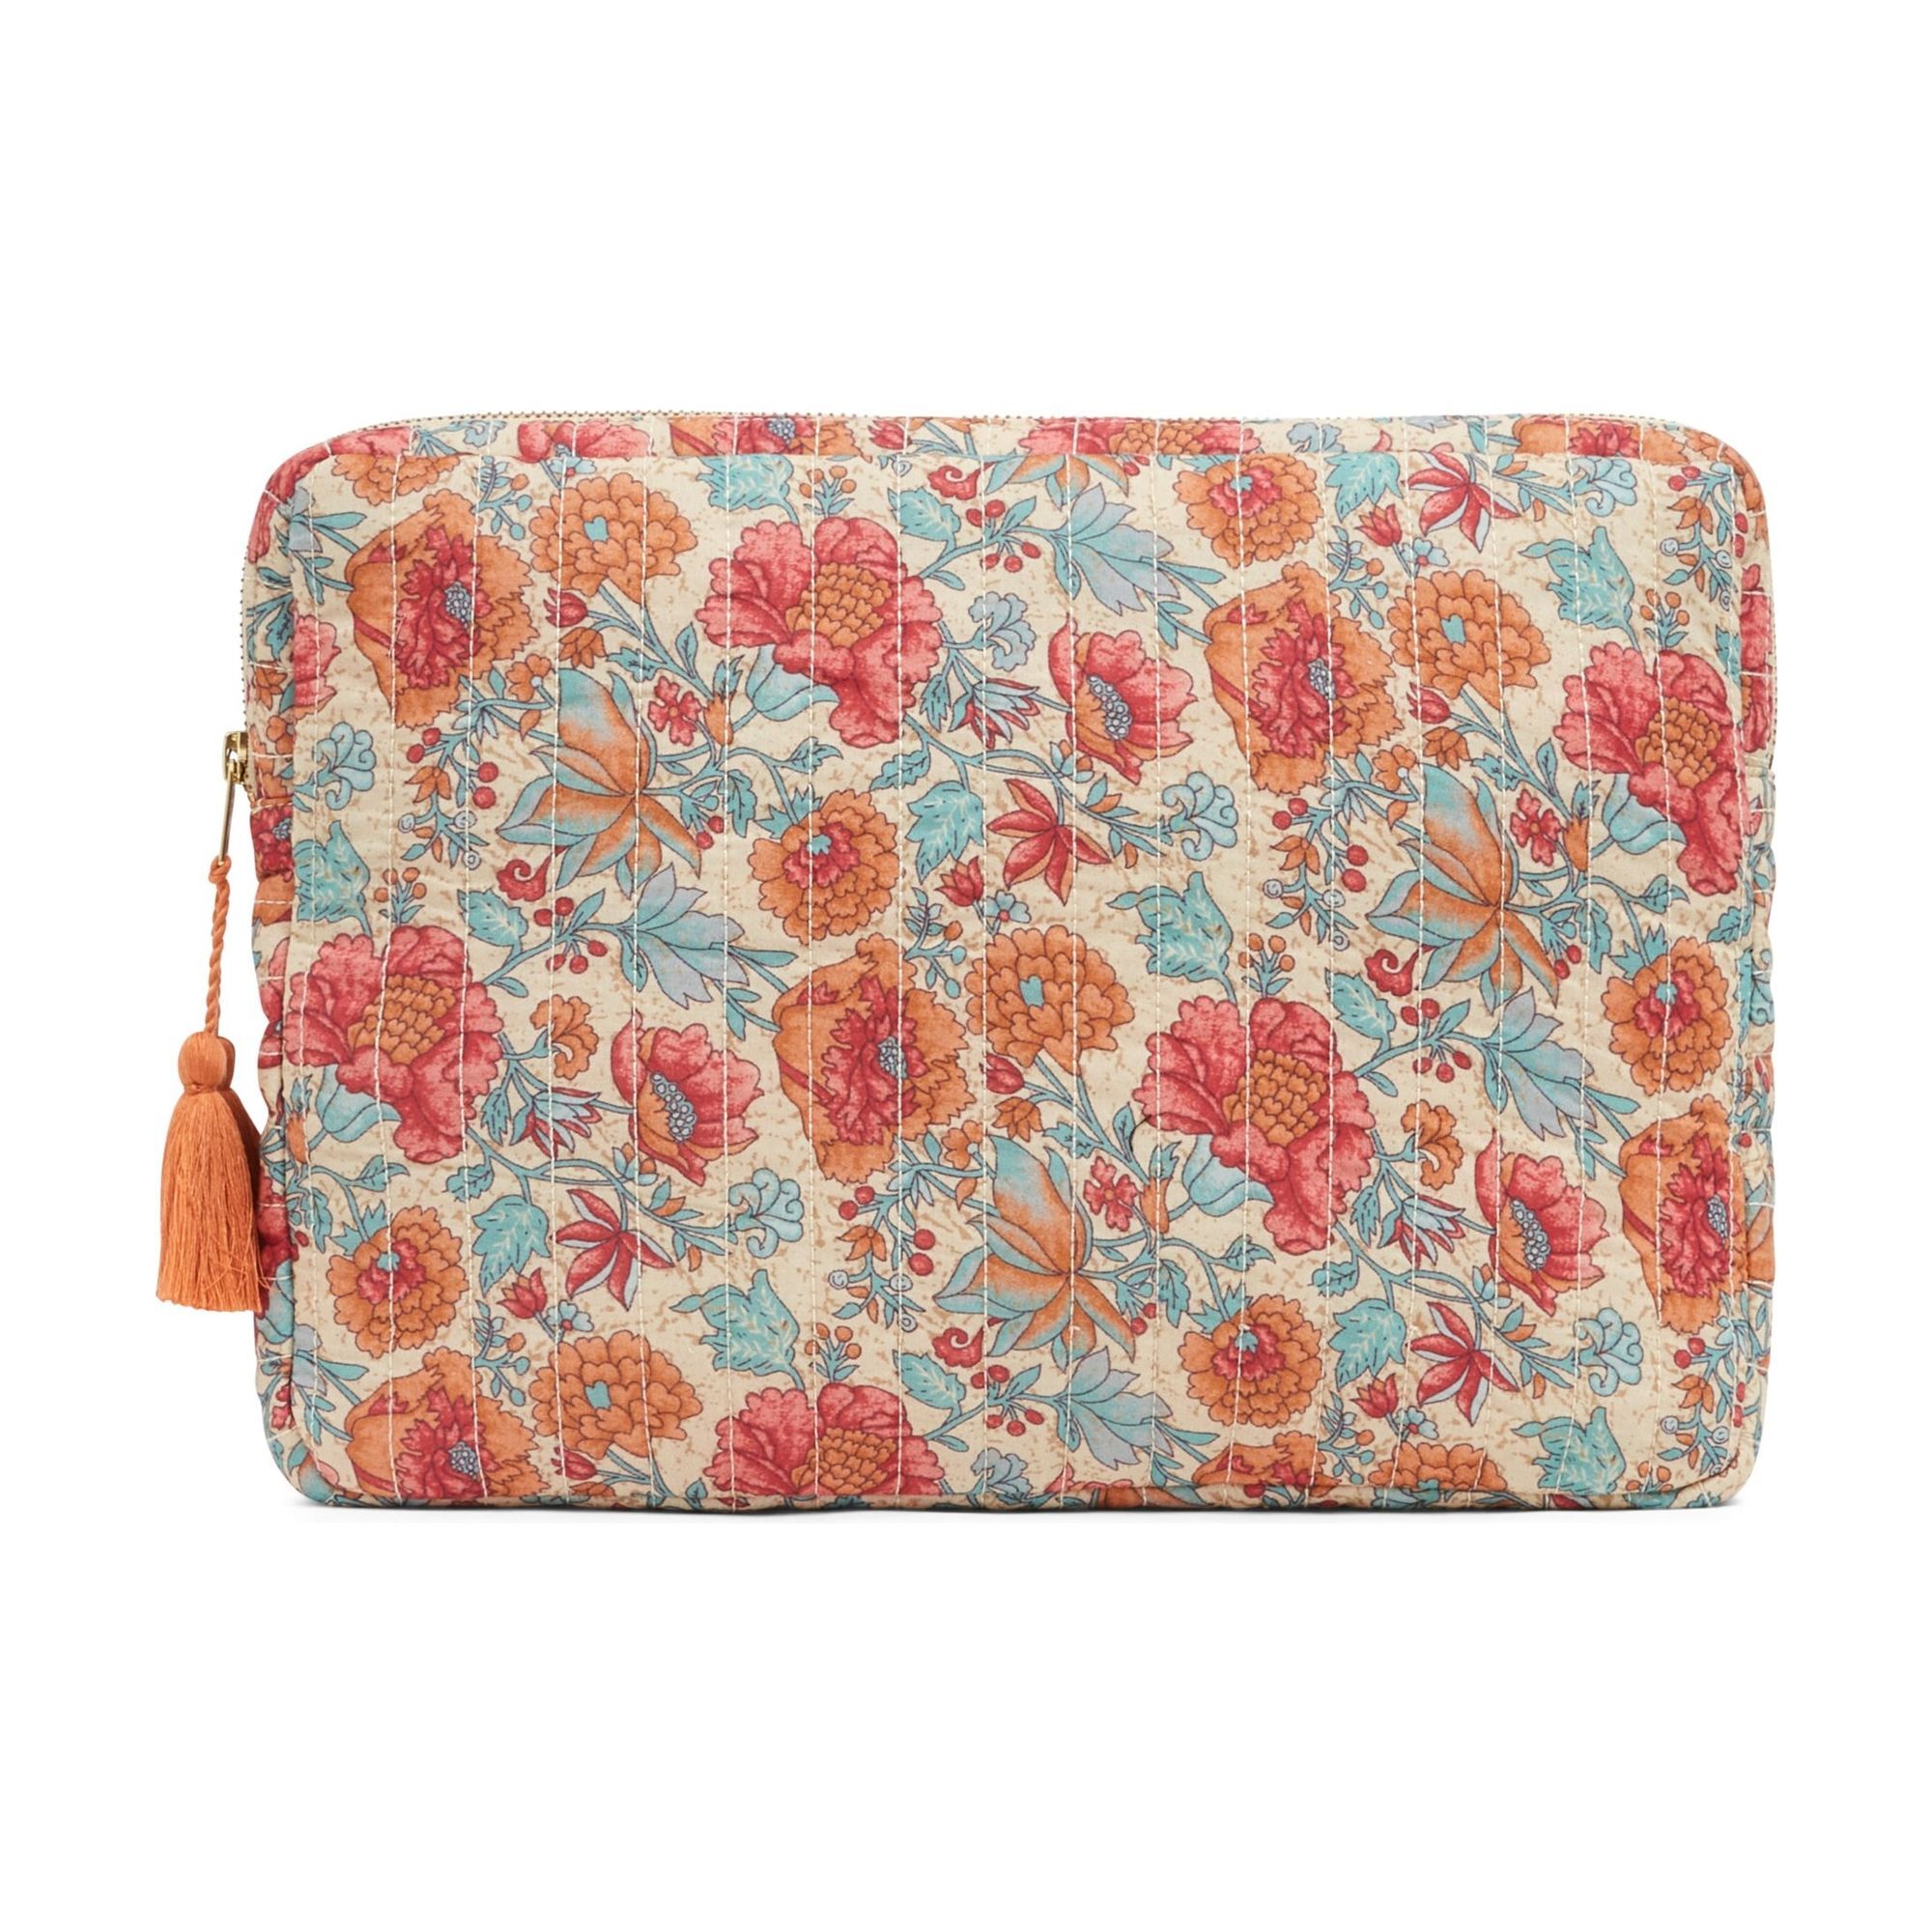 Louise Misha x Smallable exclusive - Hoa laptop bag Multicoloured one size unisex